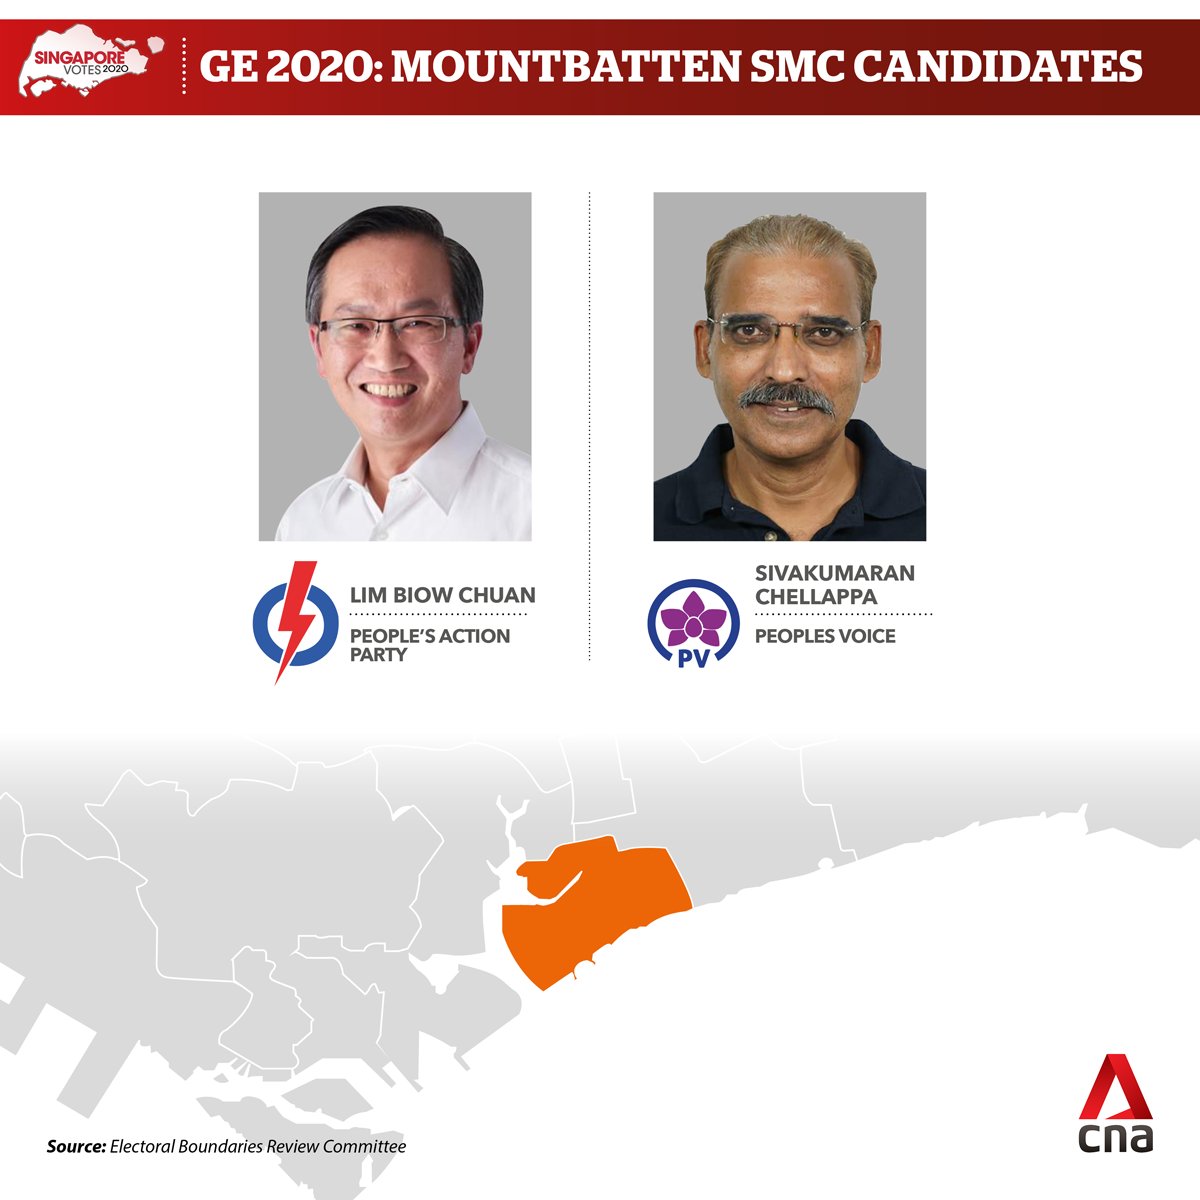  #GE2020  : It will be PAP's Lim Biow Chuan vs Peoples Voice candidate Sivakumaran Chellappa in Mountbatten SMC  https://cna.asia/2YHinPM 